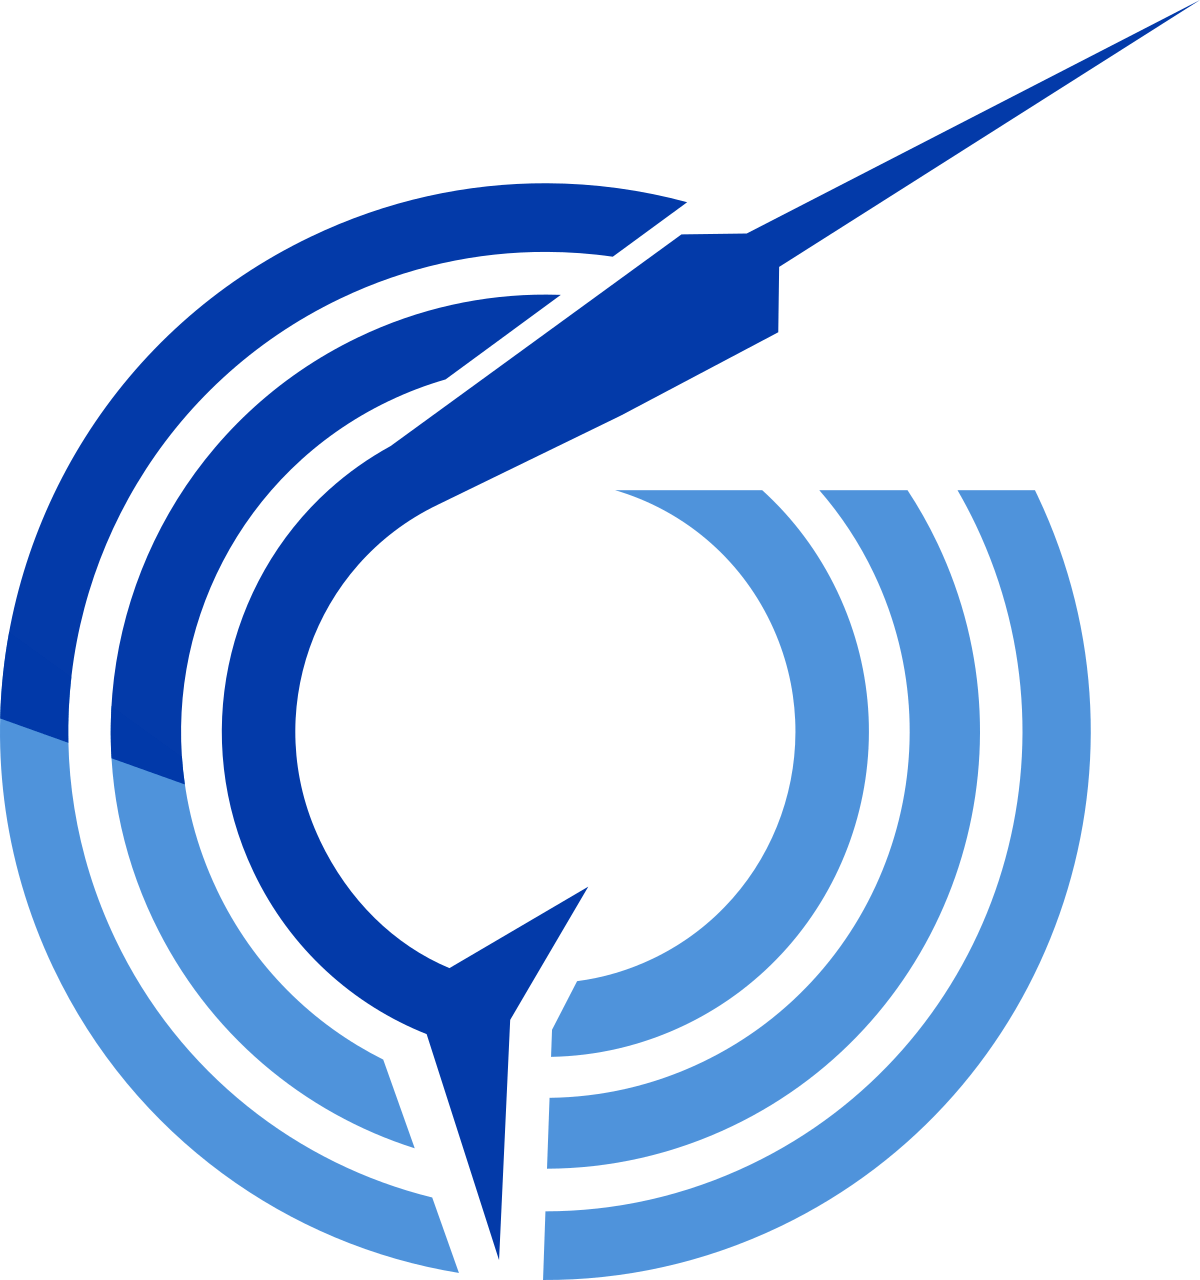 Bfar Logo - Bureau of Fisheries and Aquatic Resources